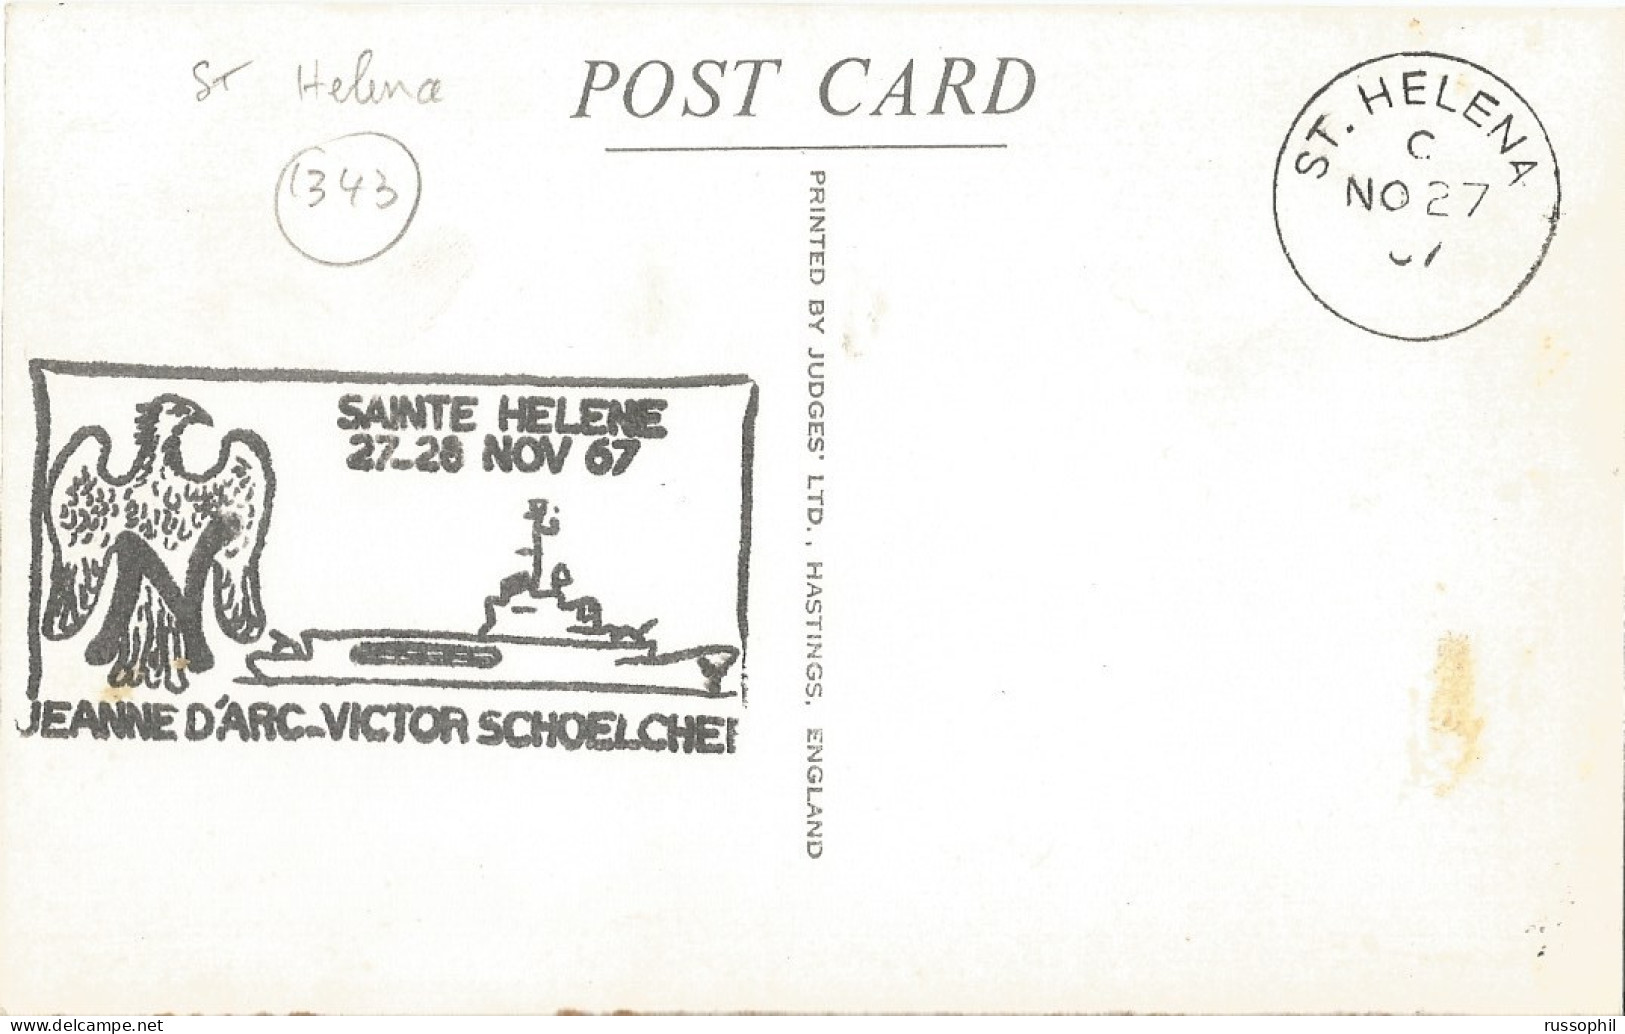 ST HELENA - JACOB'S LADDER, 699 STEPS - PUB. JUDGES LTD, HASTINGSREF REF #2  - FRENCH WAR SHIP " JEANNE D'ARC " - 1967 - Saint Helena Island